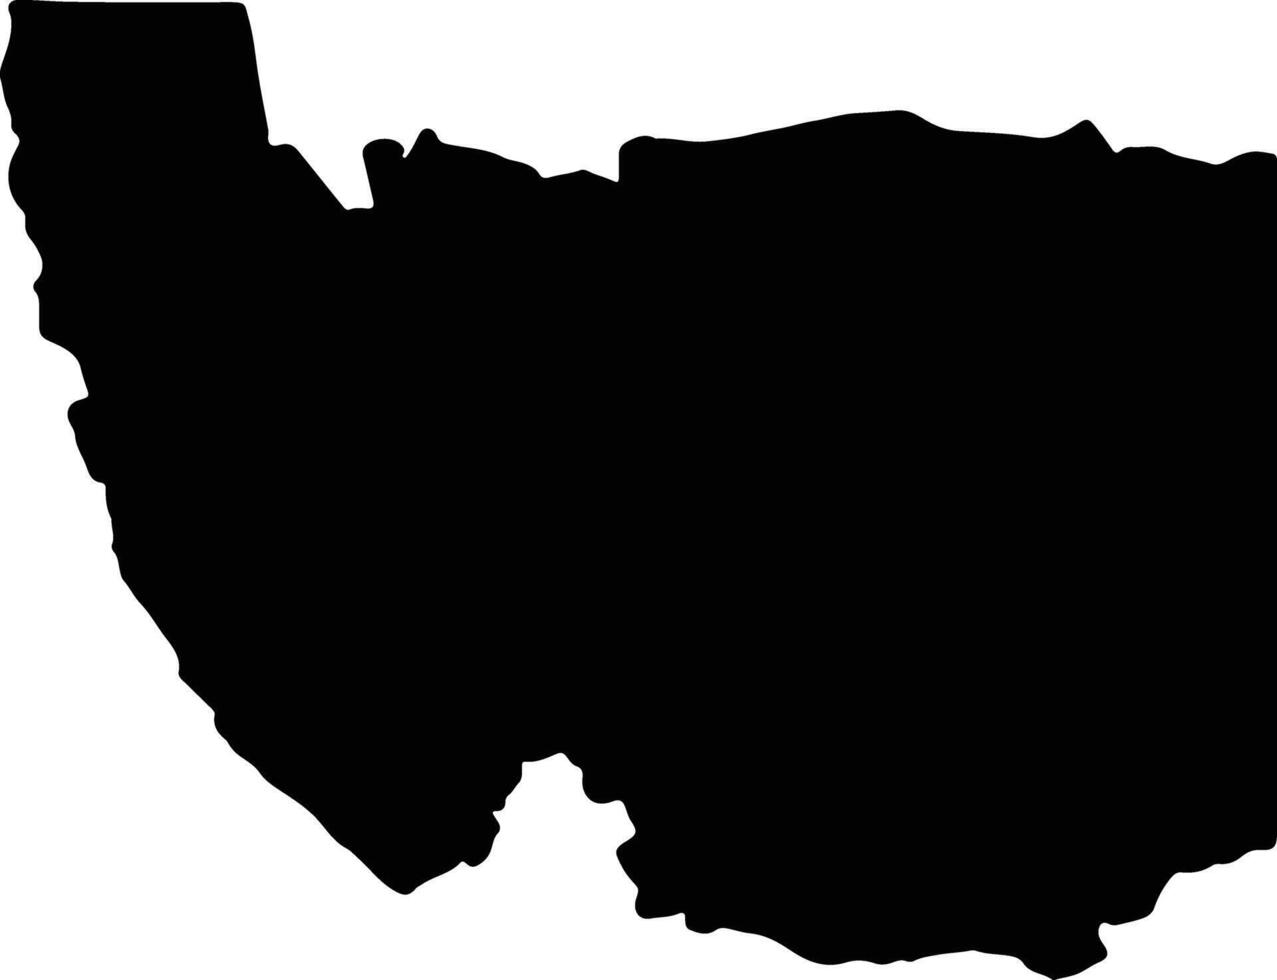 cara namibia silhouette carta geografica vettore